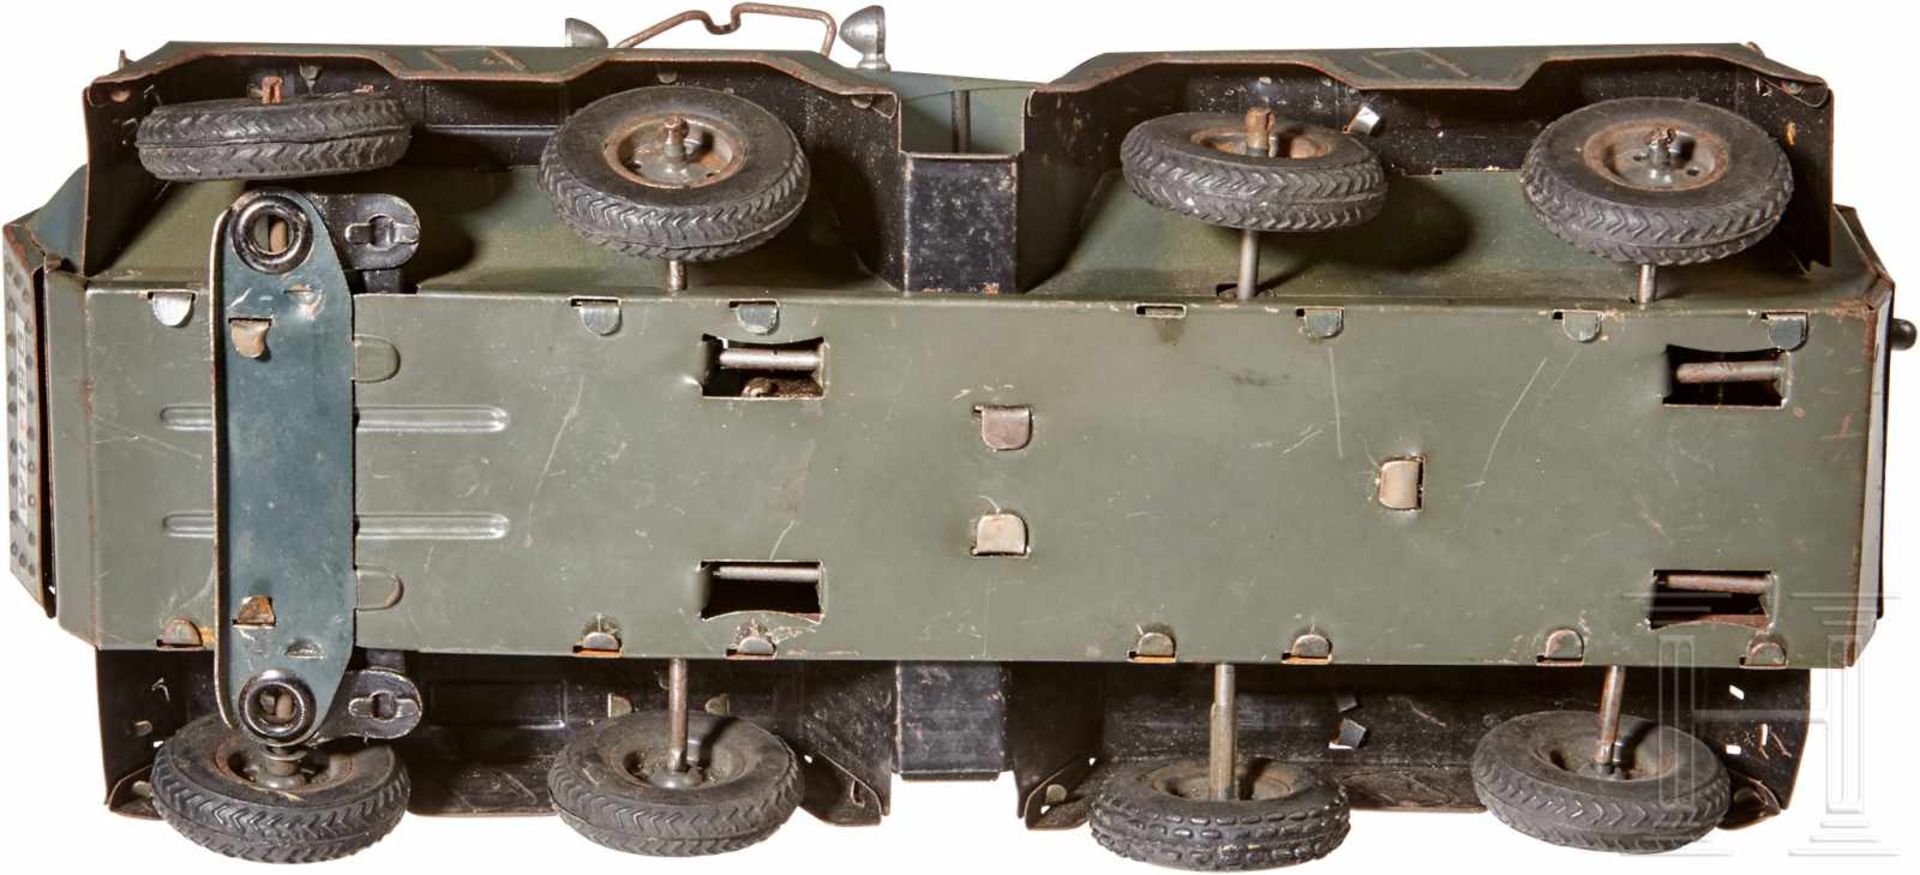 A Tipp & Co. Eight Wheel Panzer Reconnaissance VehicleTin lithographed, missing original antenna and - Bild 3 aus 3